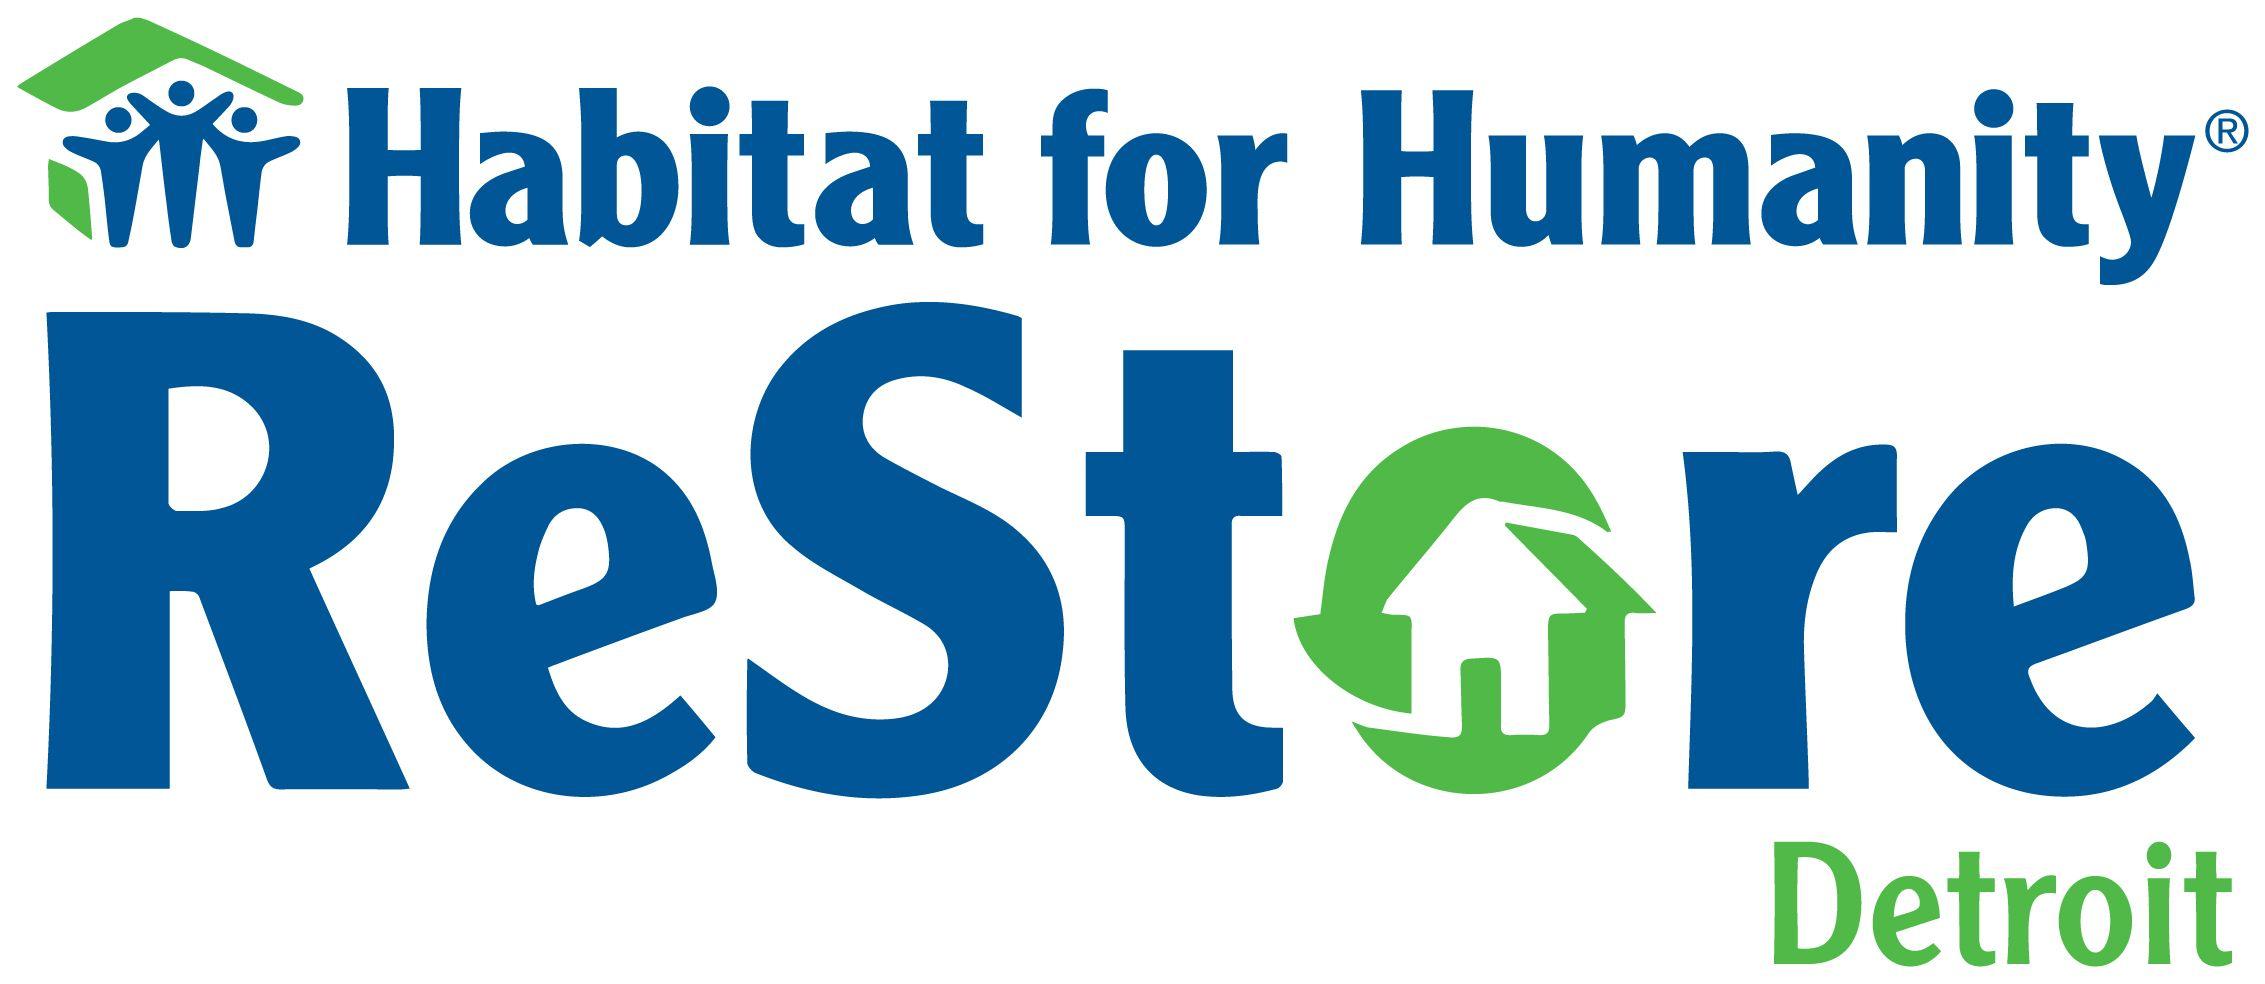 Habitat for Humanity Logo - Home Page 2 For Humanity Detroit ReStoresHabitat